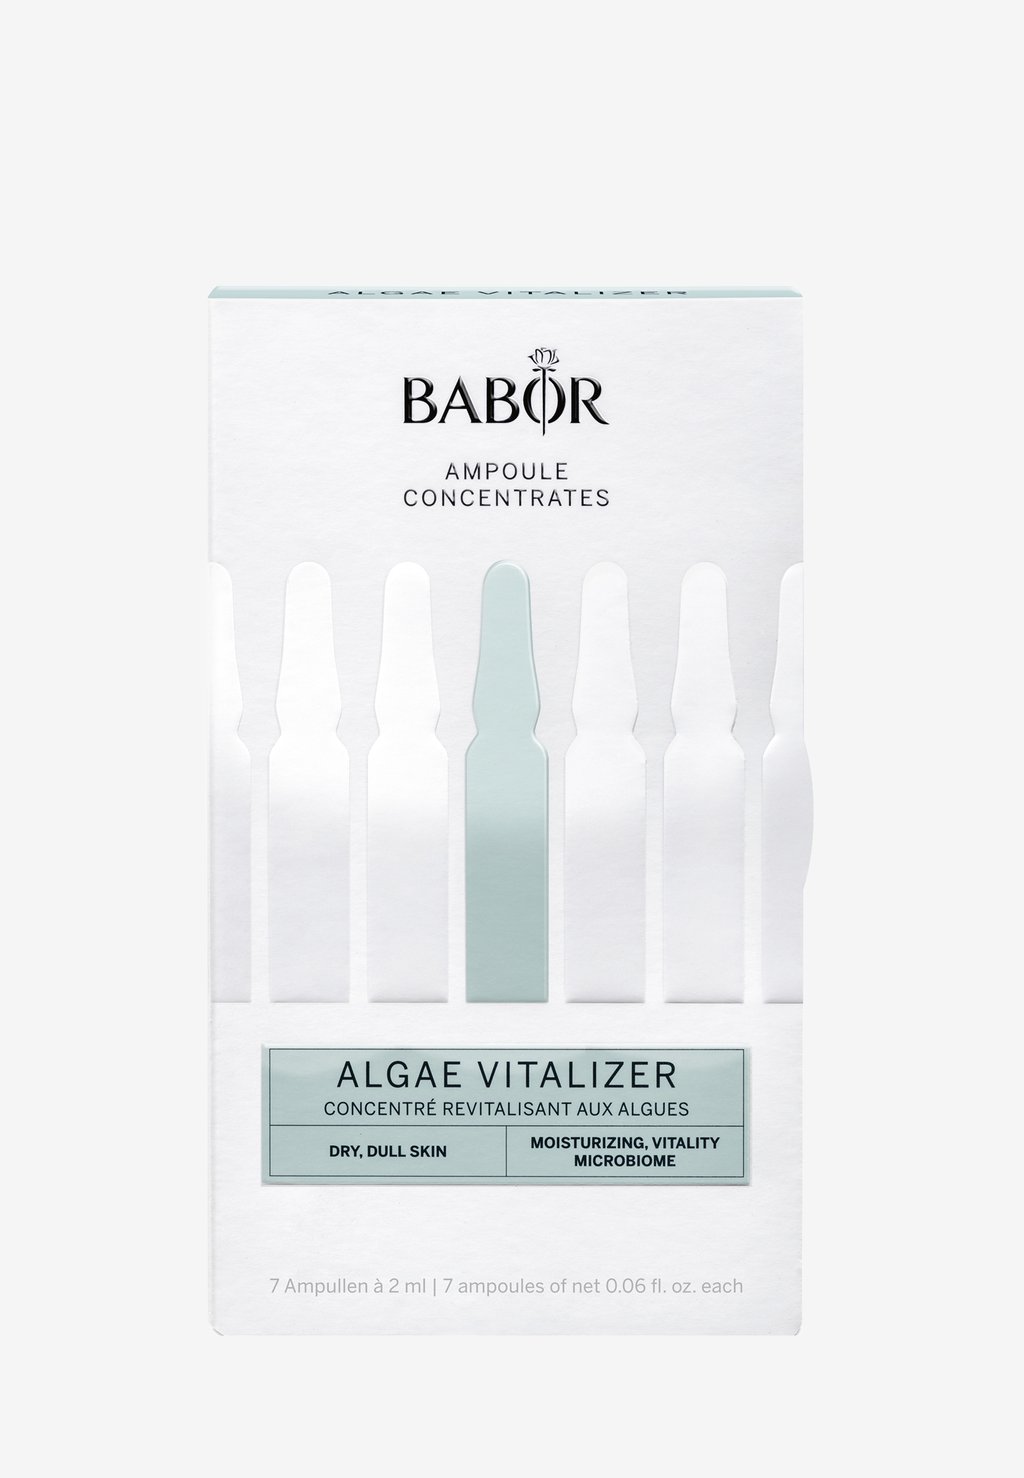 Набор для ухода за кожей Algae Vitalizer BABOR